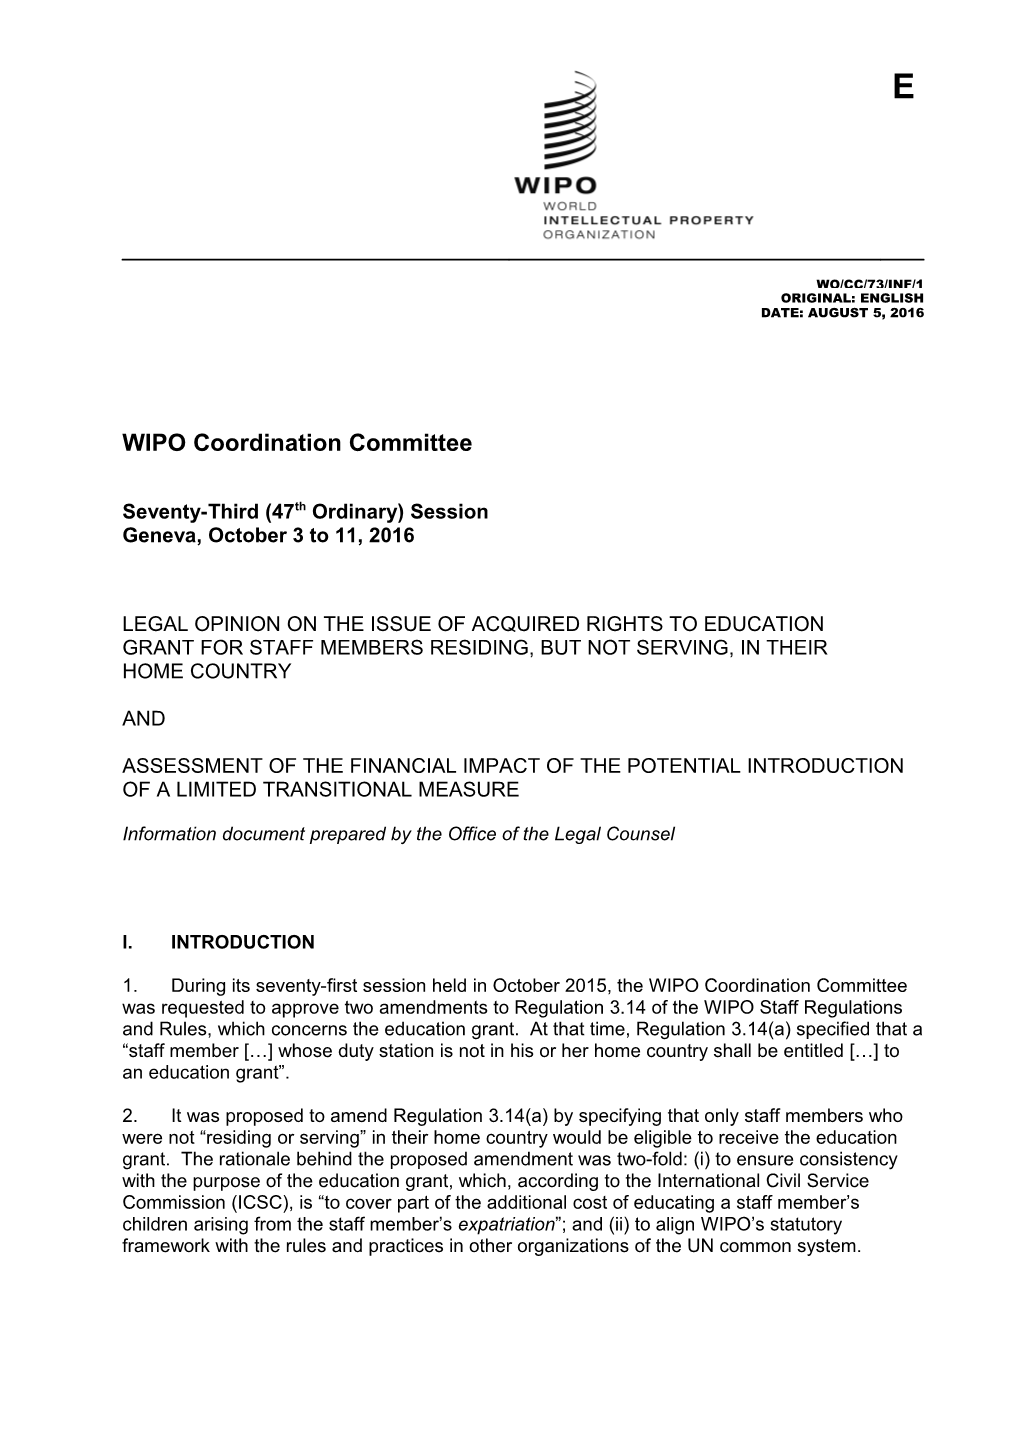 Wo/Cc/71/4, Amendments to Staff Regulations and Rules